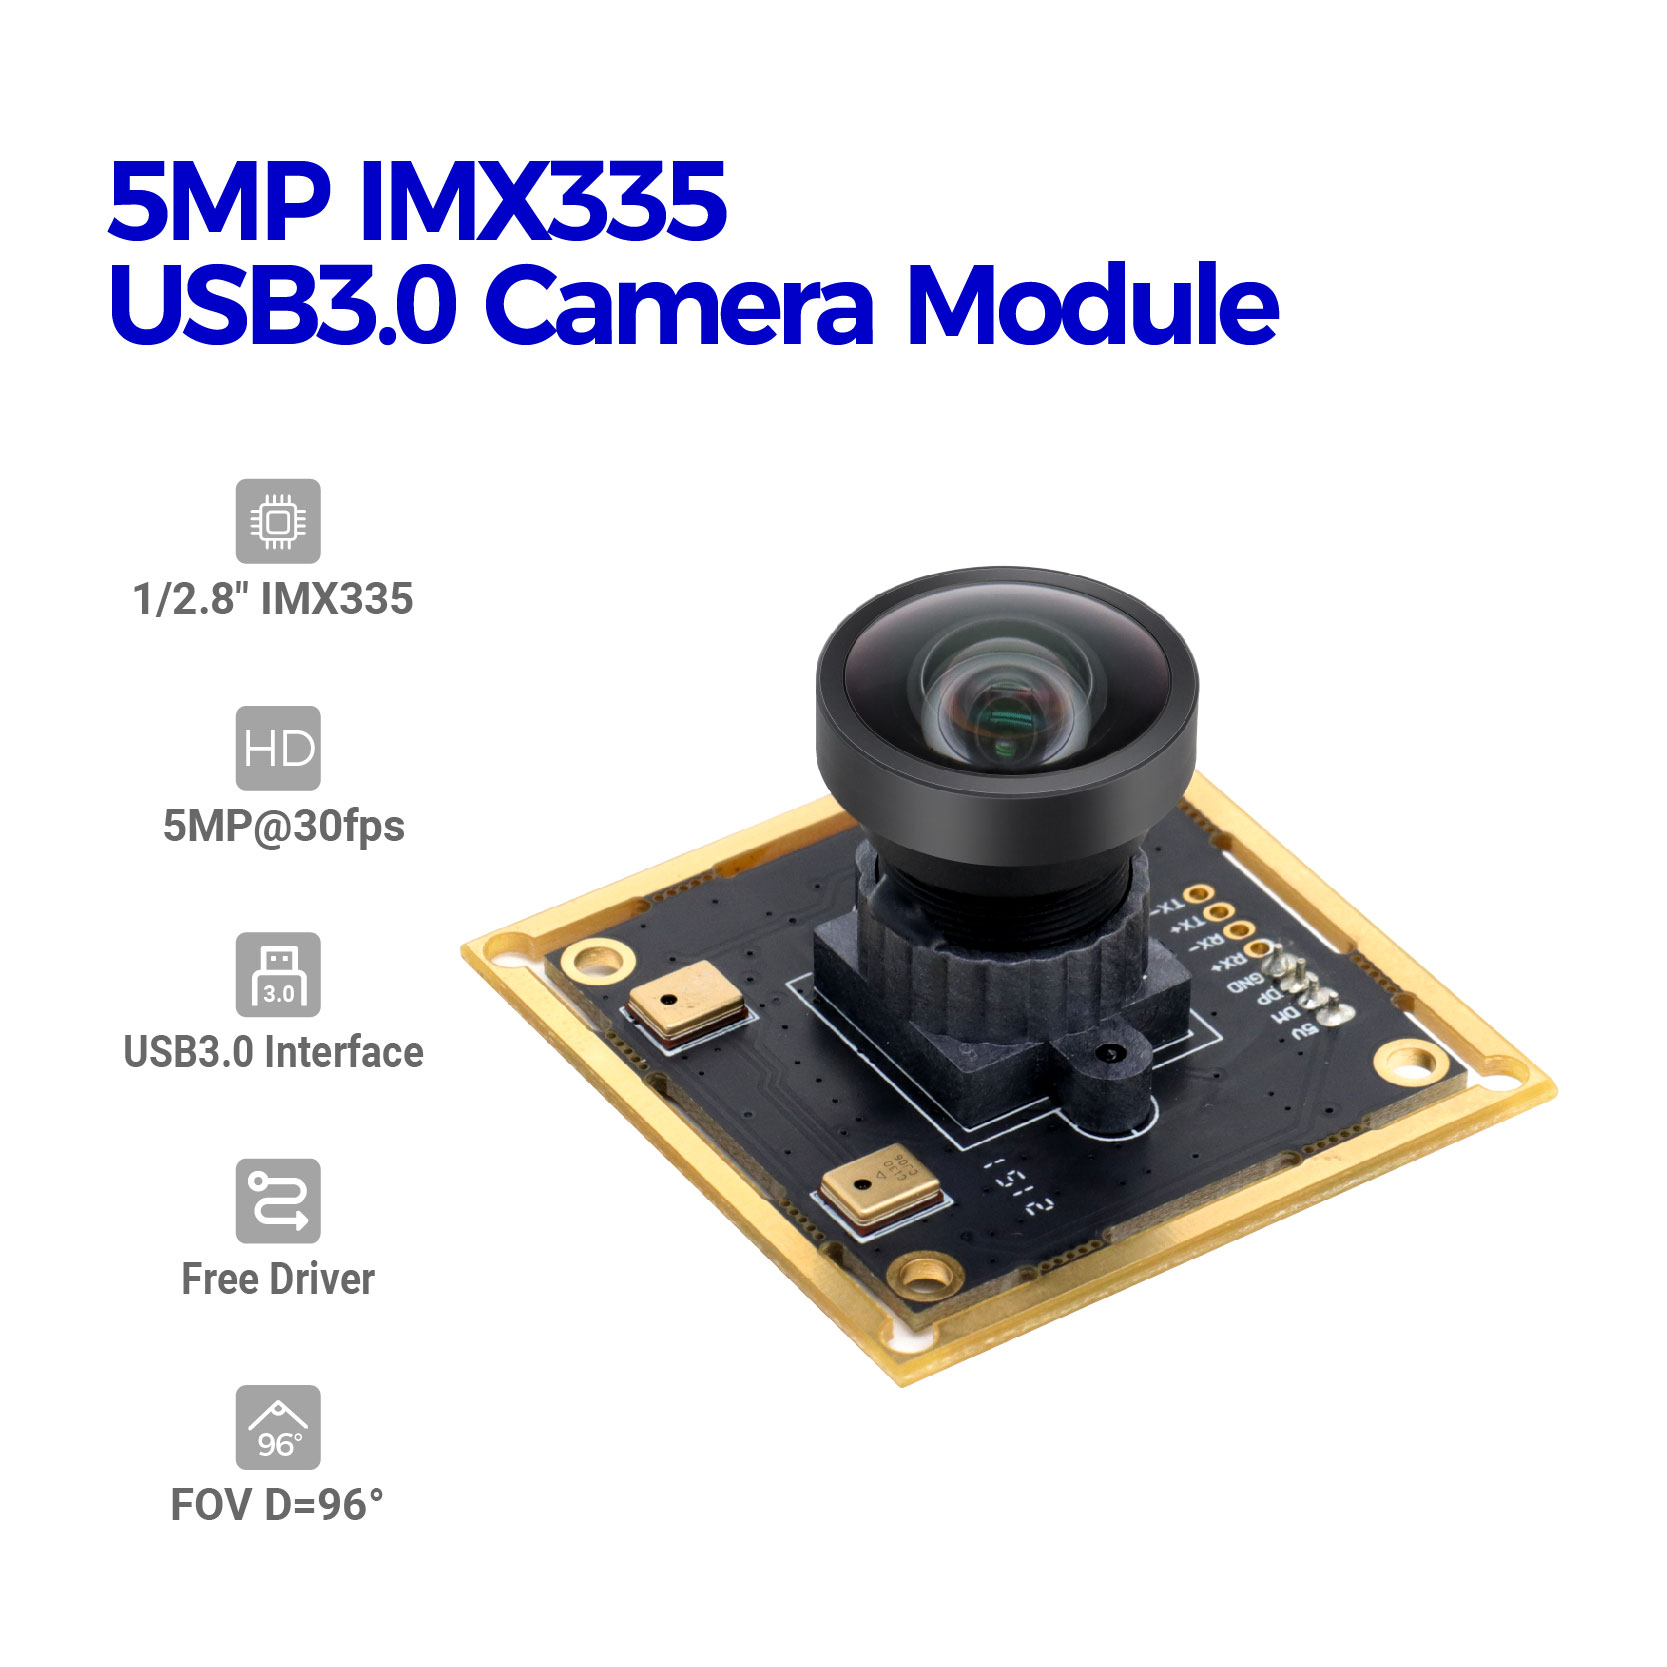 5MP IMX335 USB3.0 Camera Module